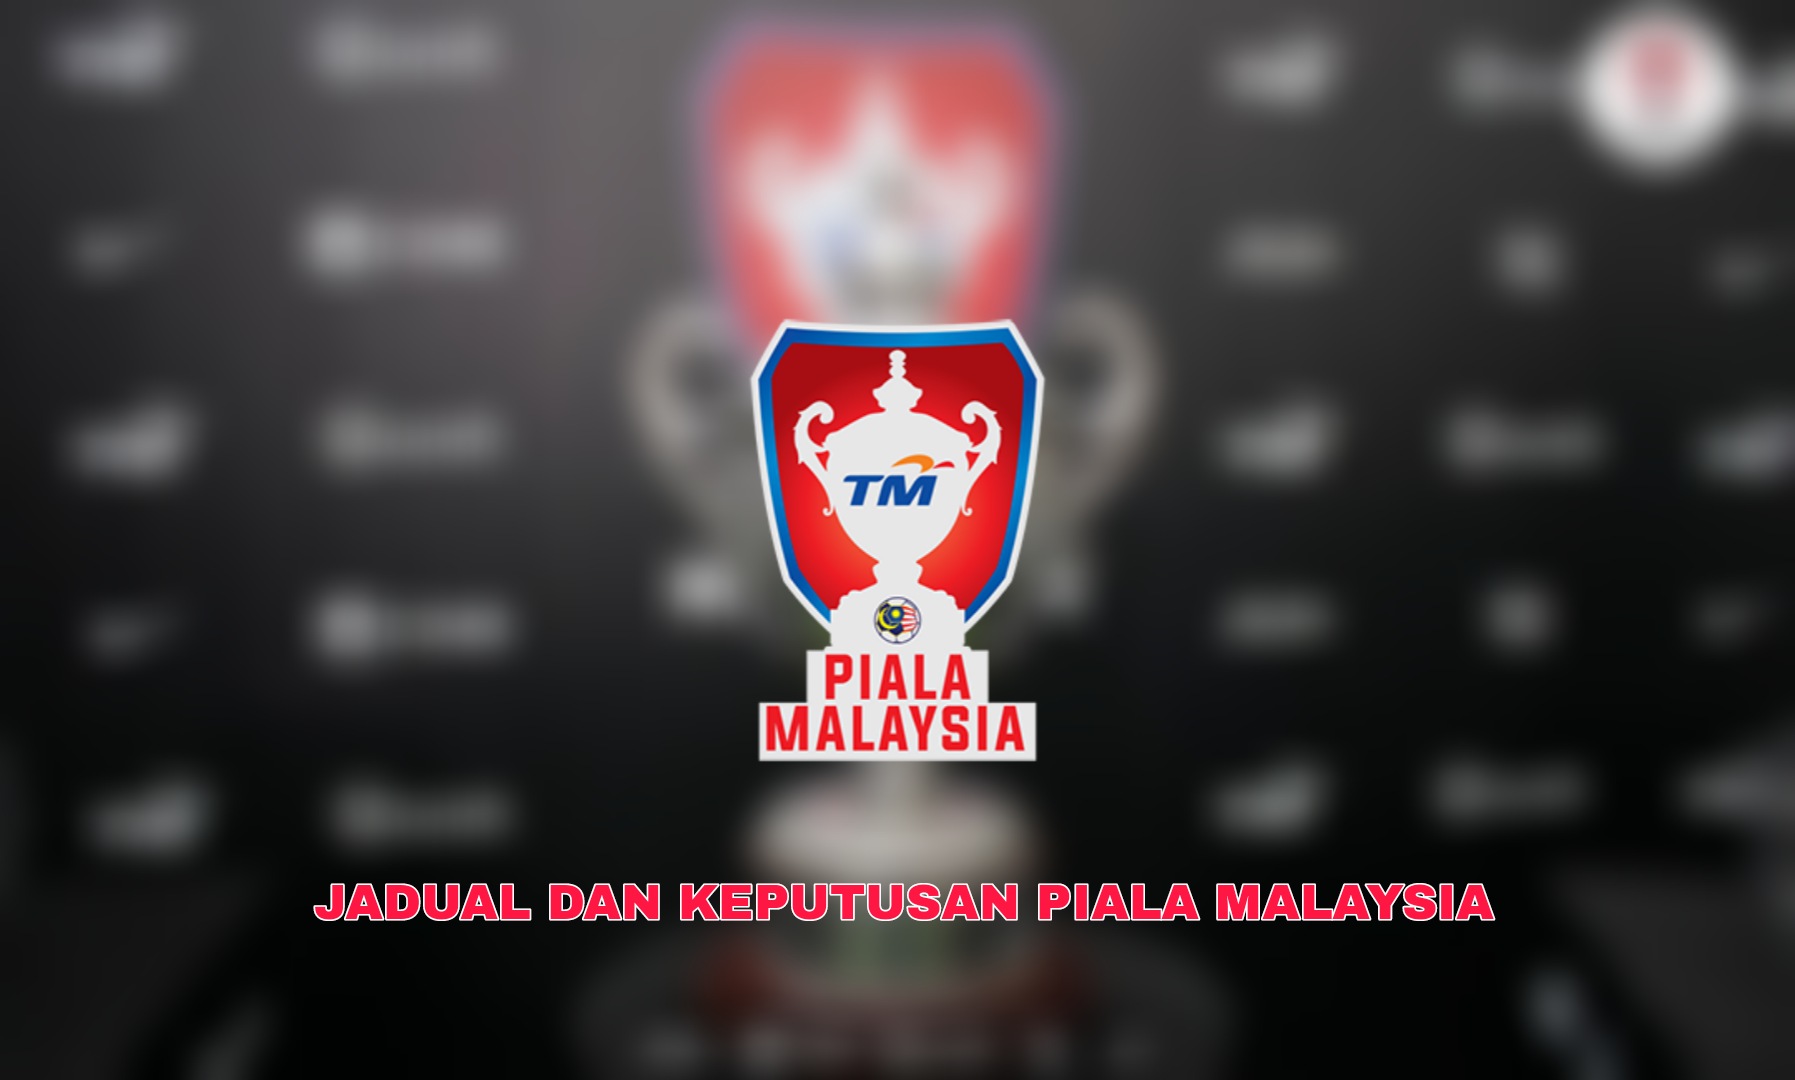 Jadual dan Keputusan Piala Malaysia 2022 (Undian)